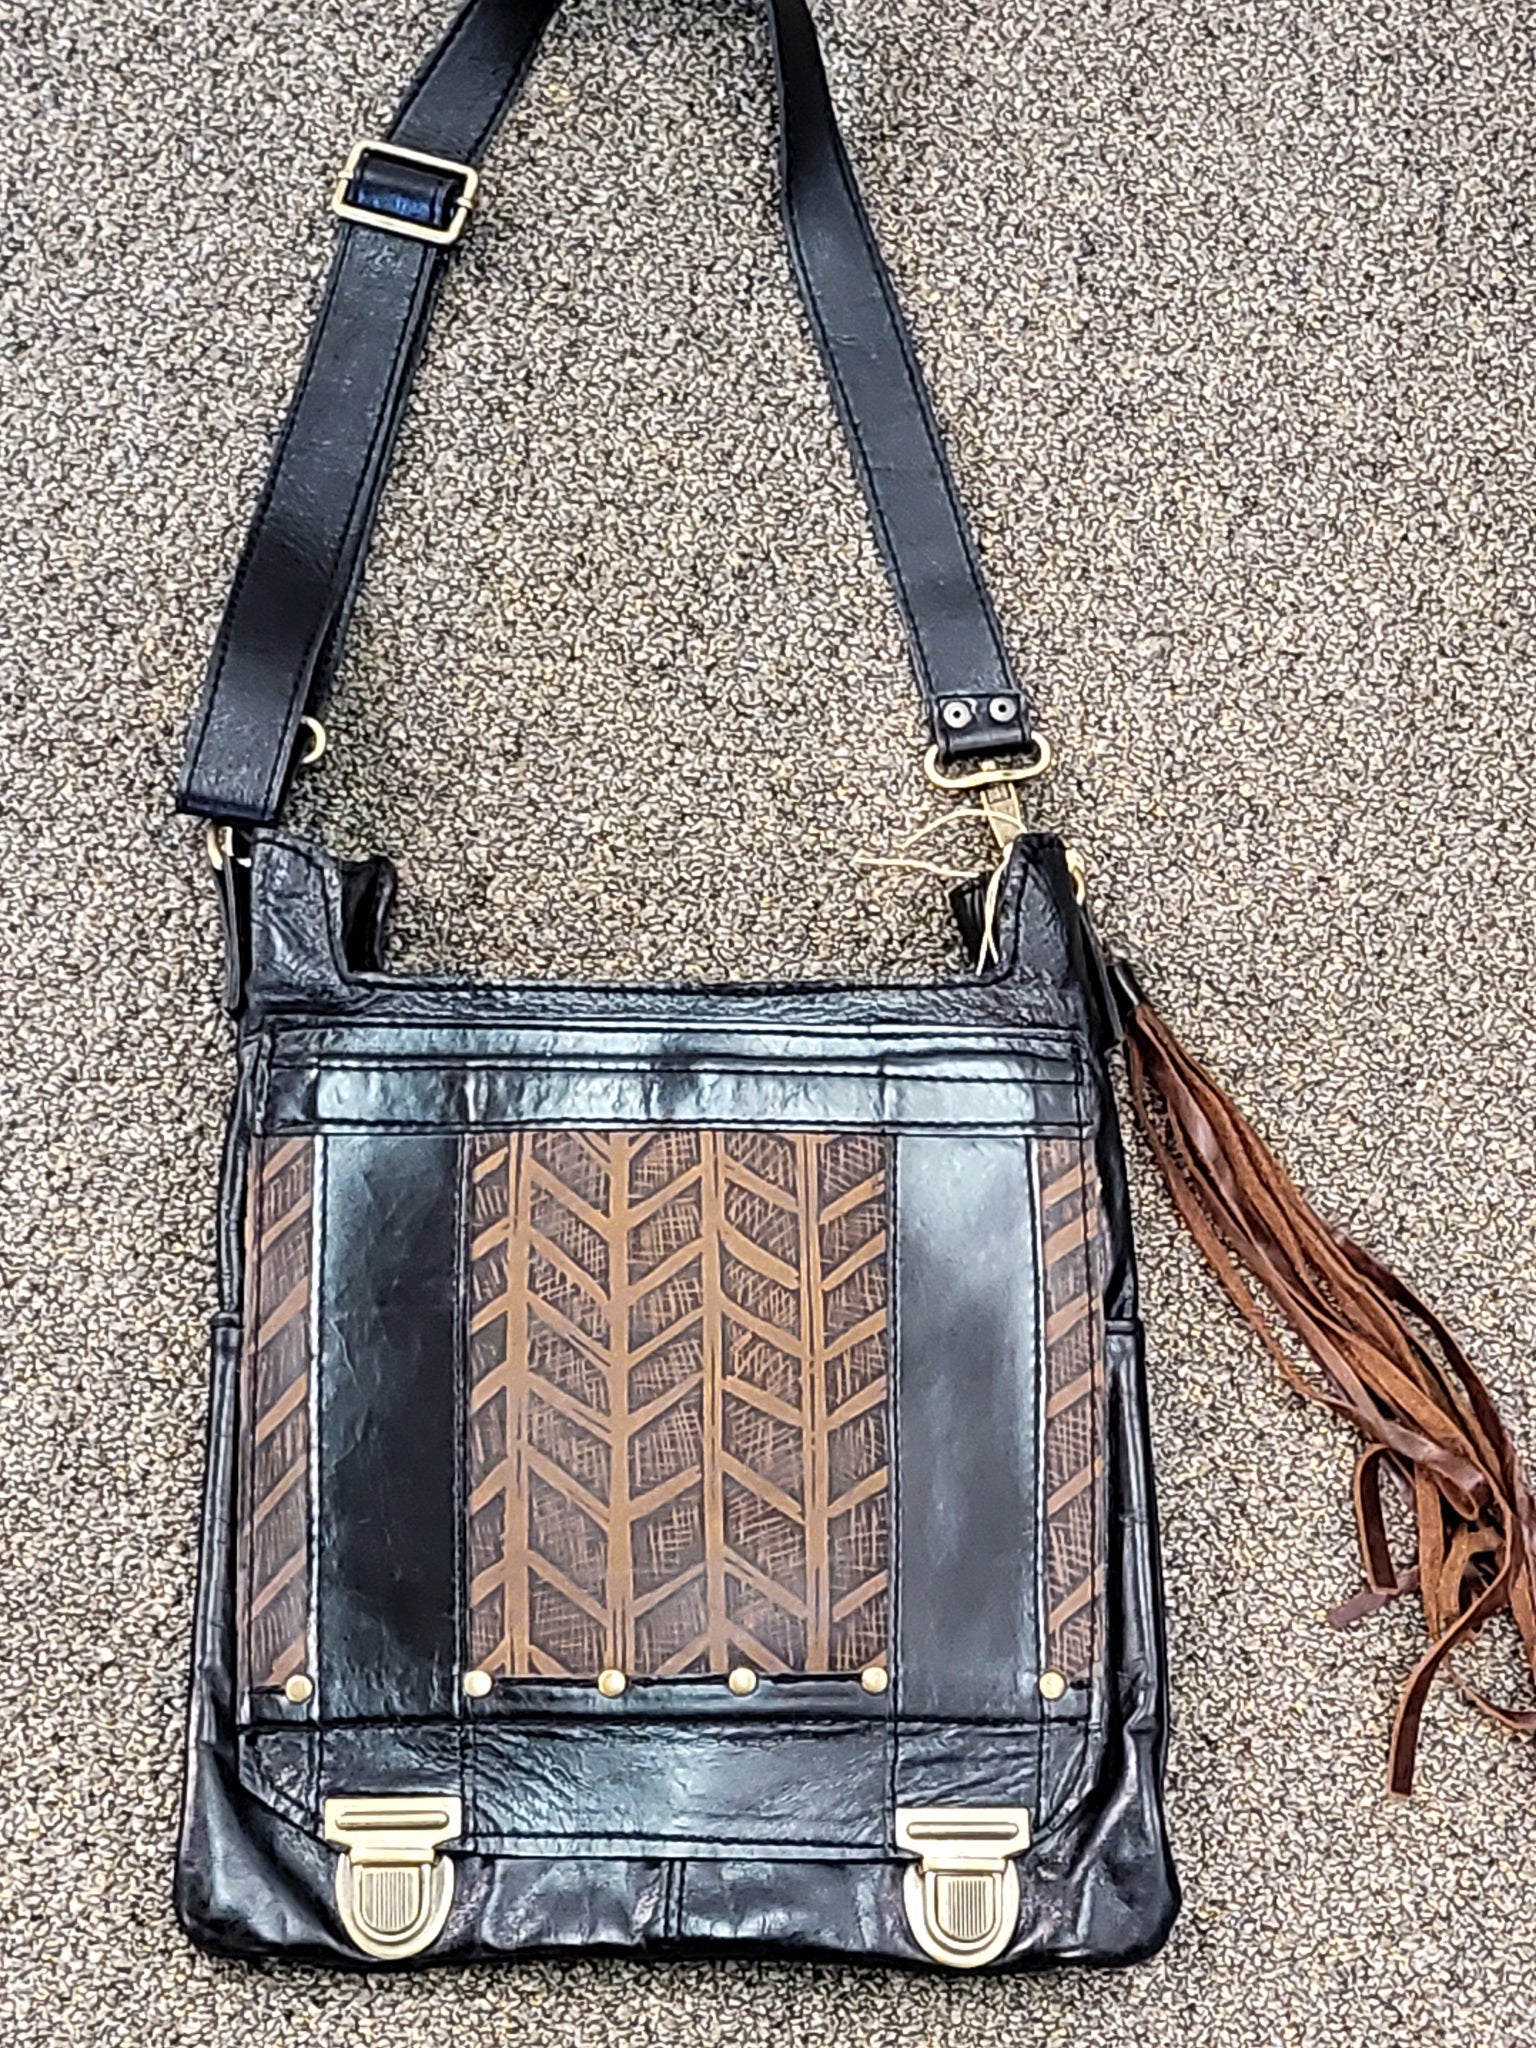 Handbag 012 - Leather Urban Satchel / Horse